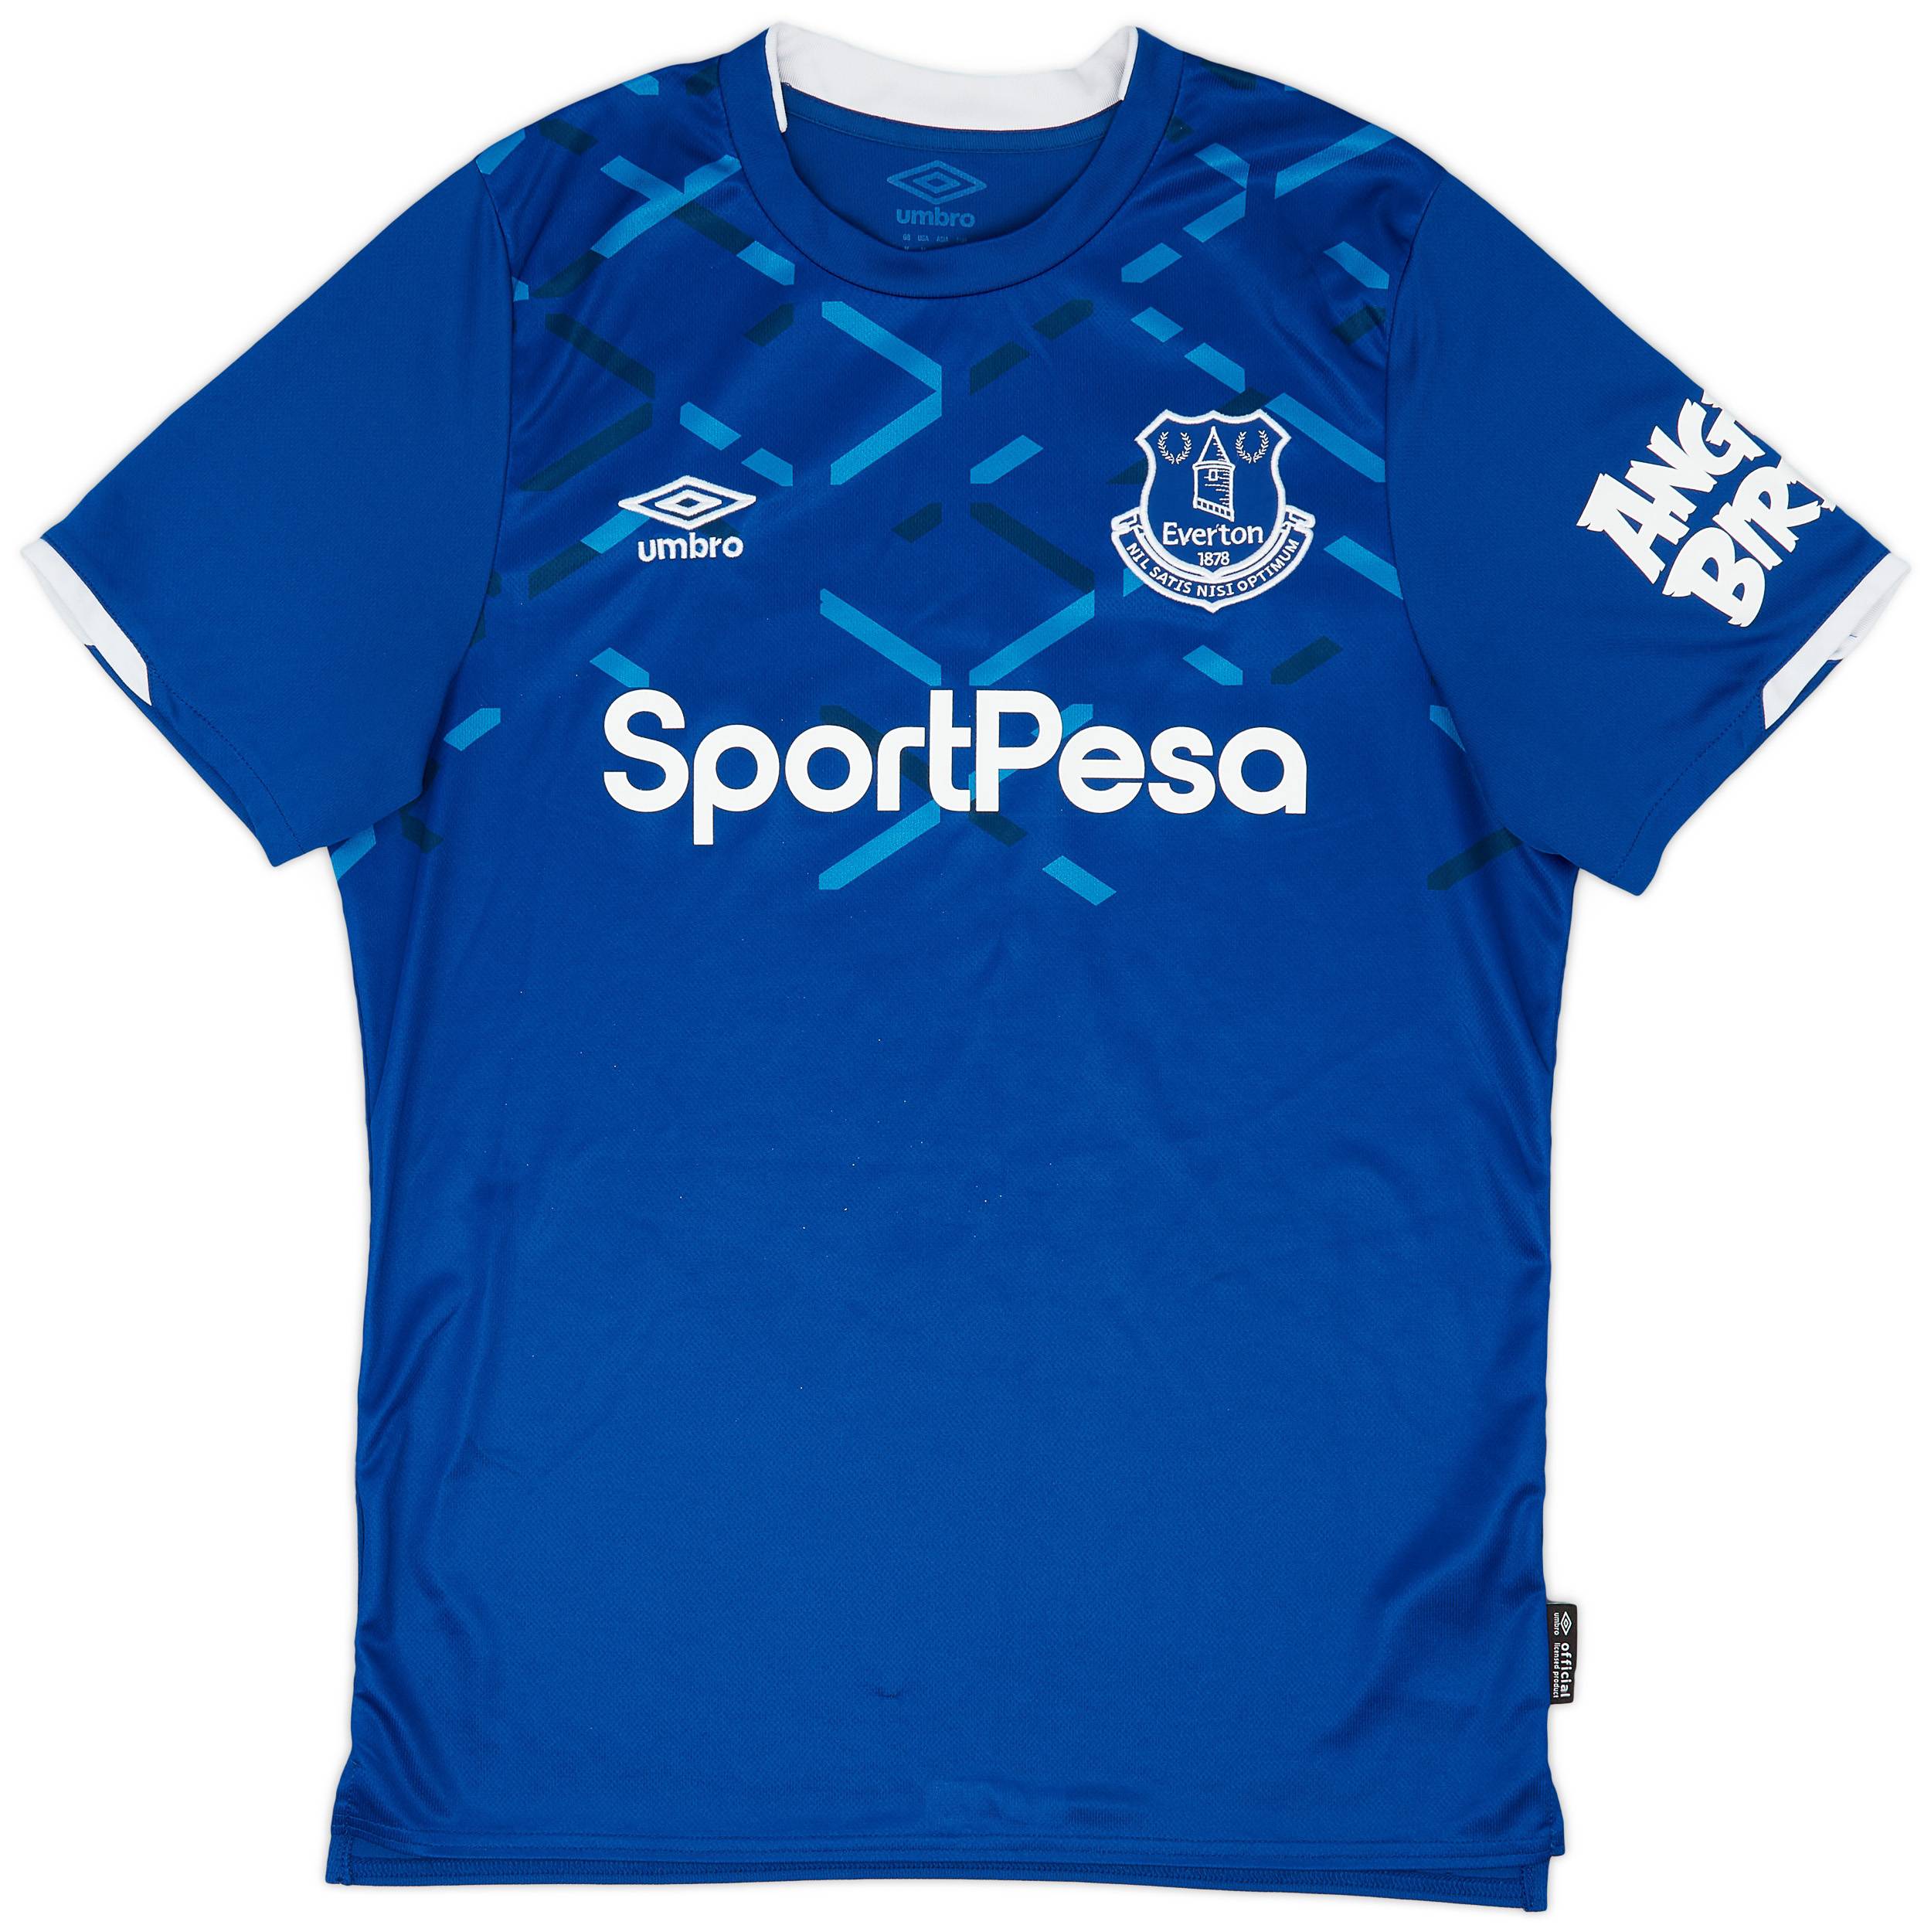 2019-20 Everton Home Shirt - 9/10 - (M)